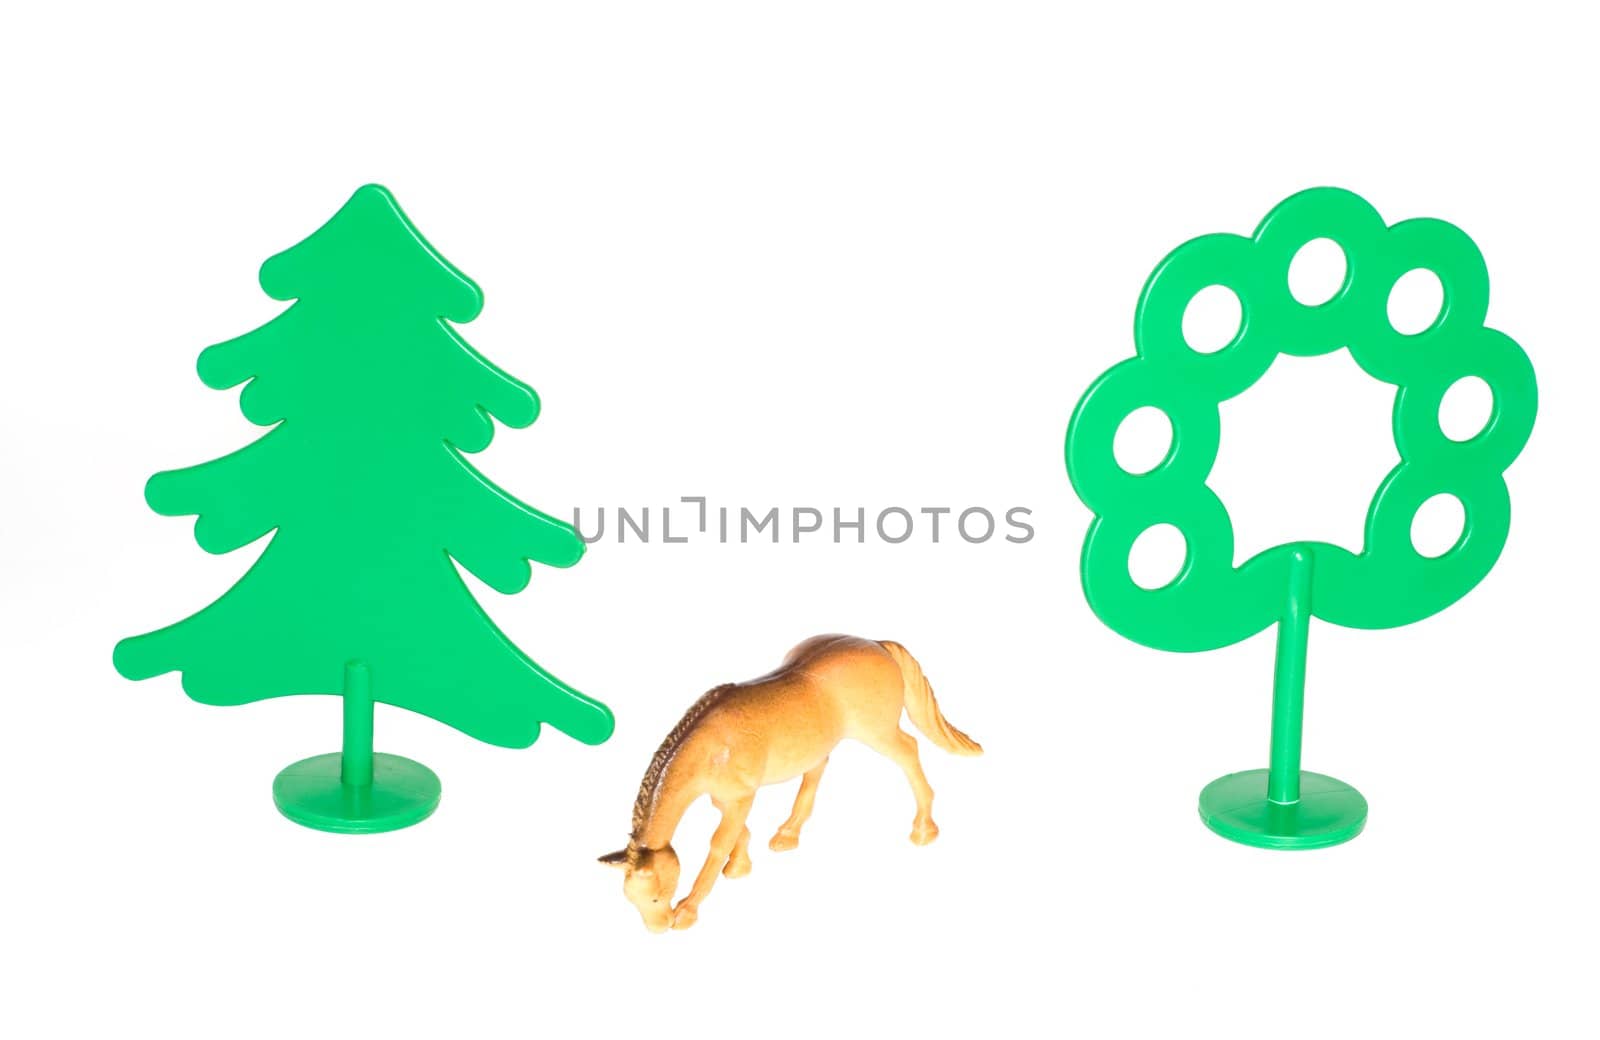 Toy horse among green trees by mafffutochka